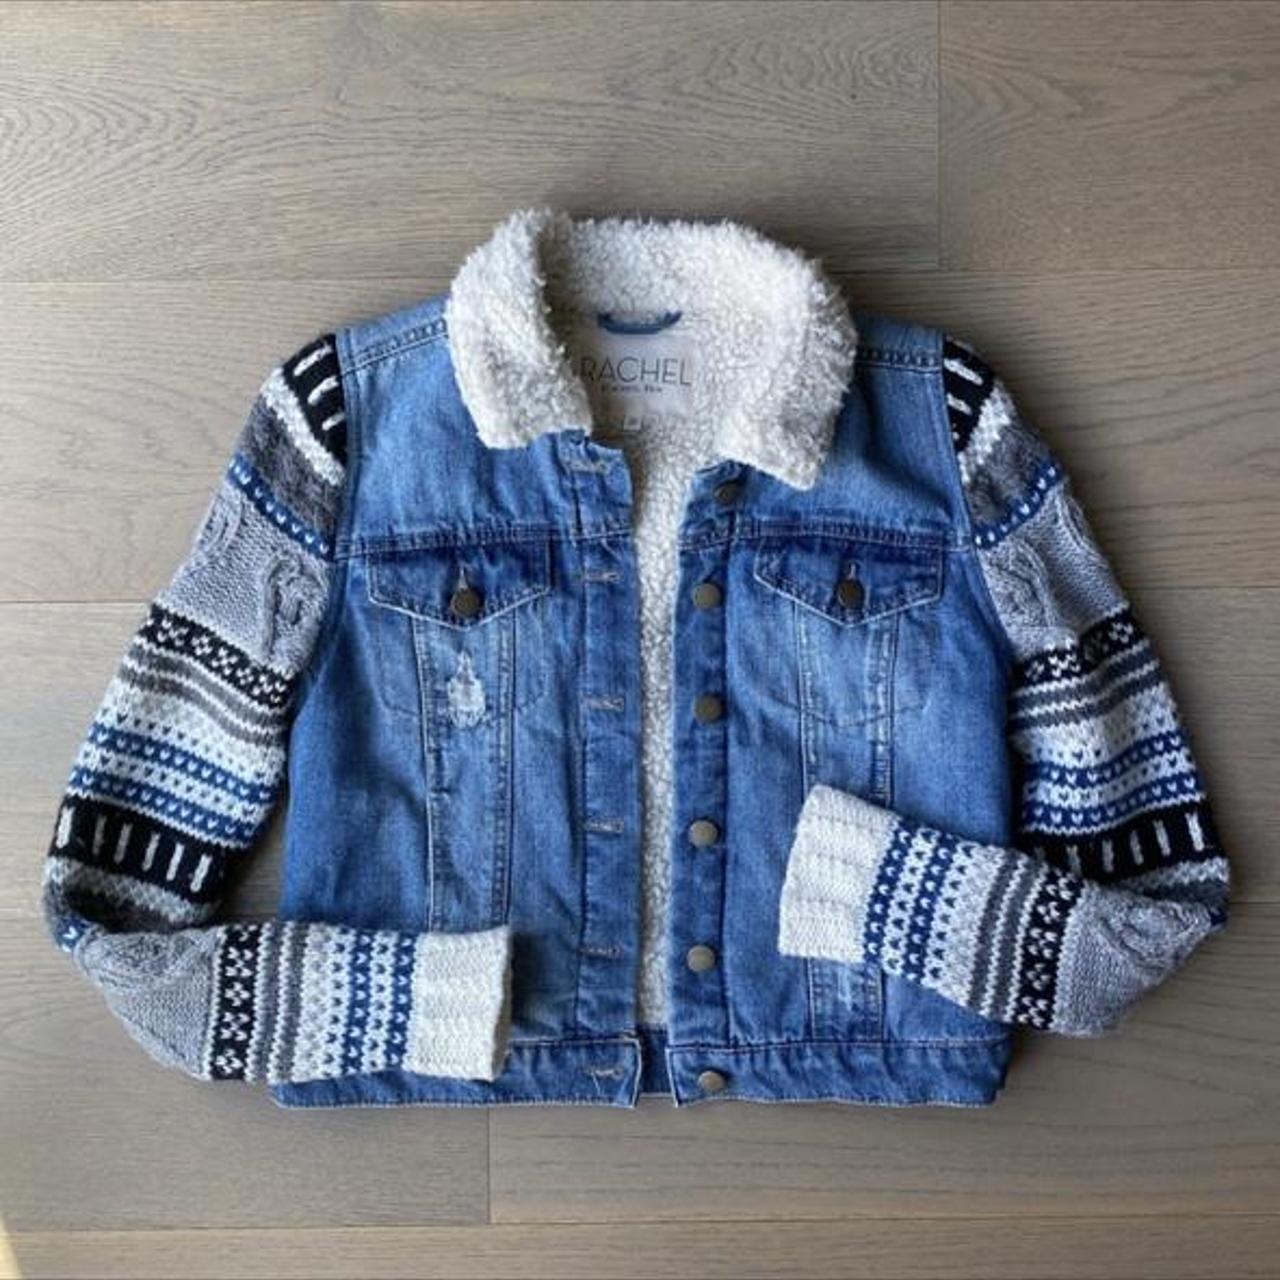 POL S BOHO Blue Mixed Media Denim Jacket with Cable-Knit Sweater Sleeves  43S | eBay